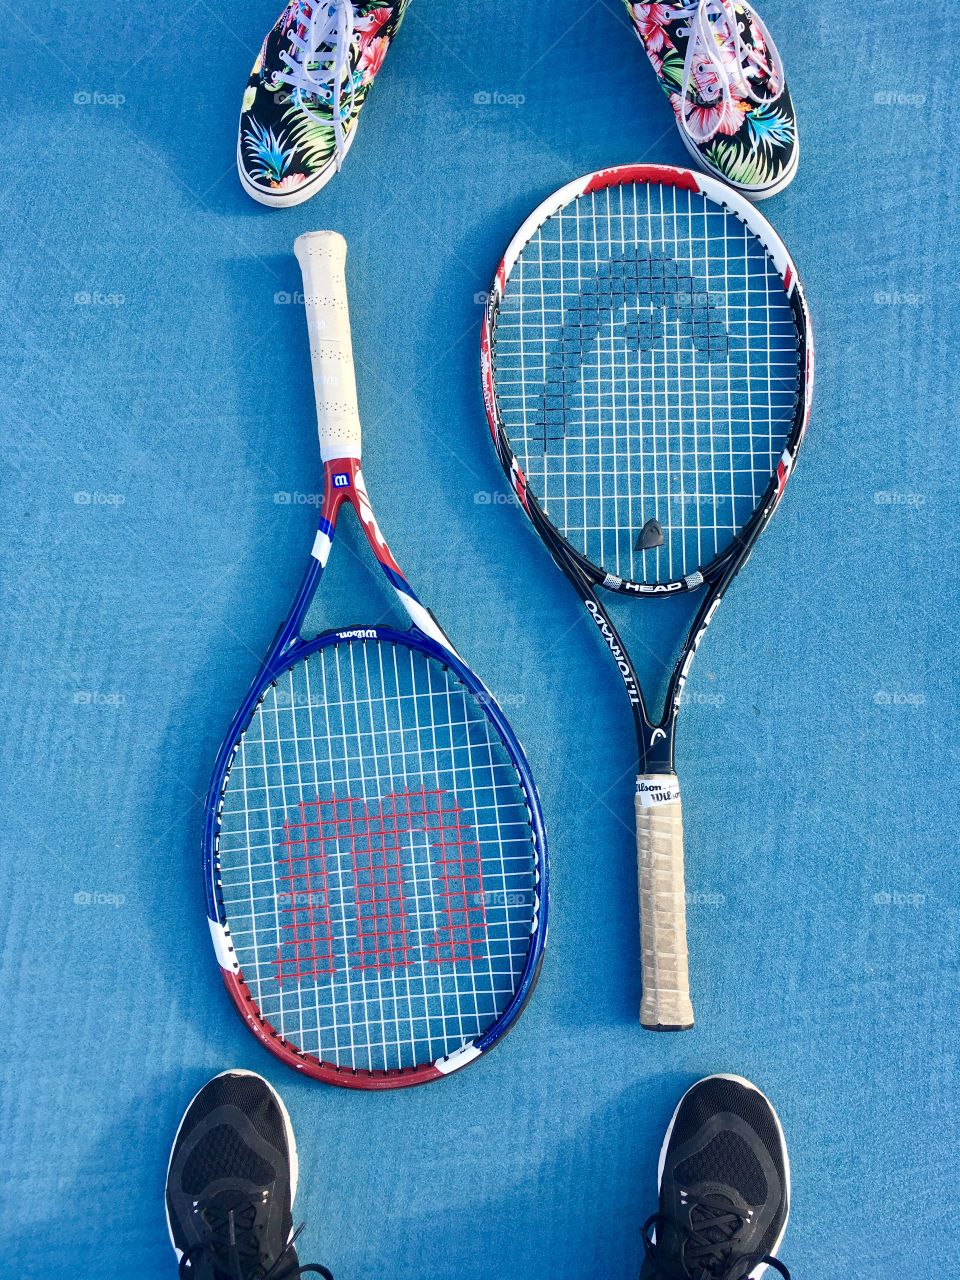 Wilson Tennis